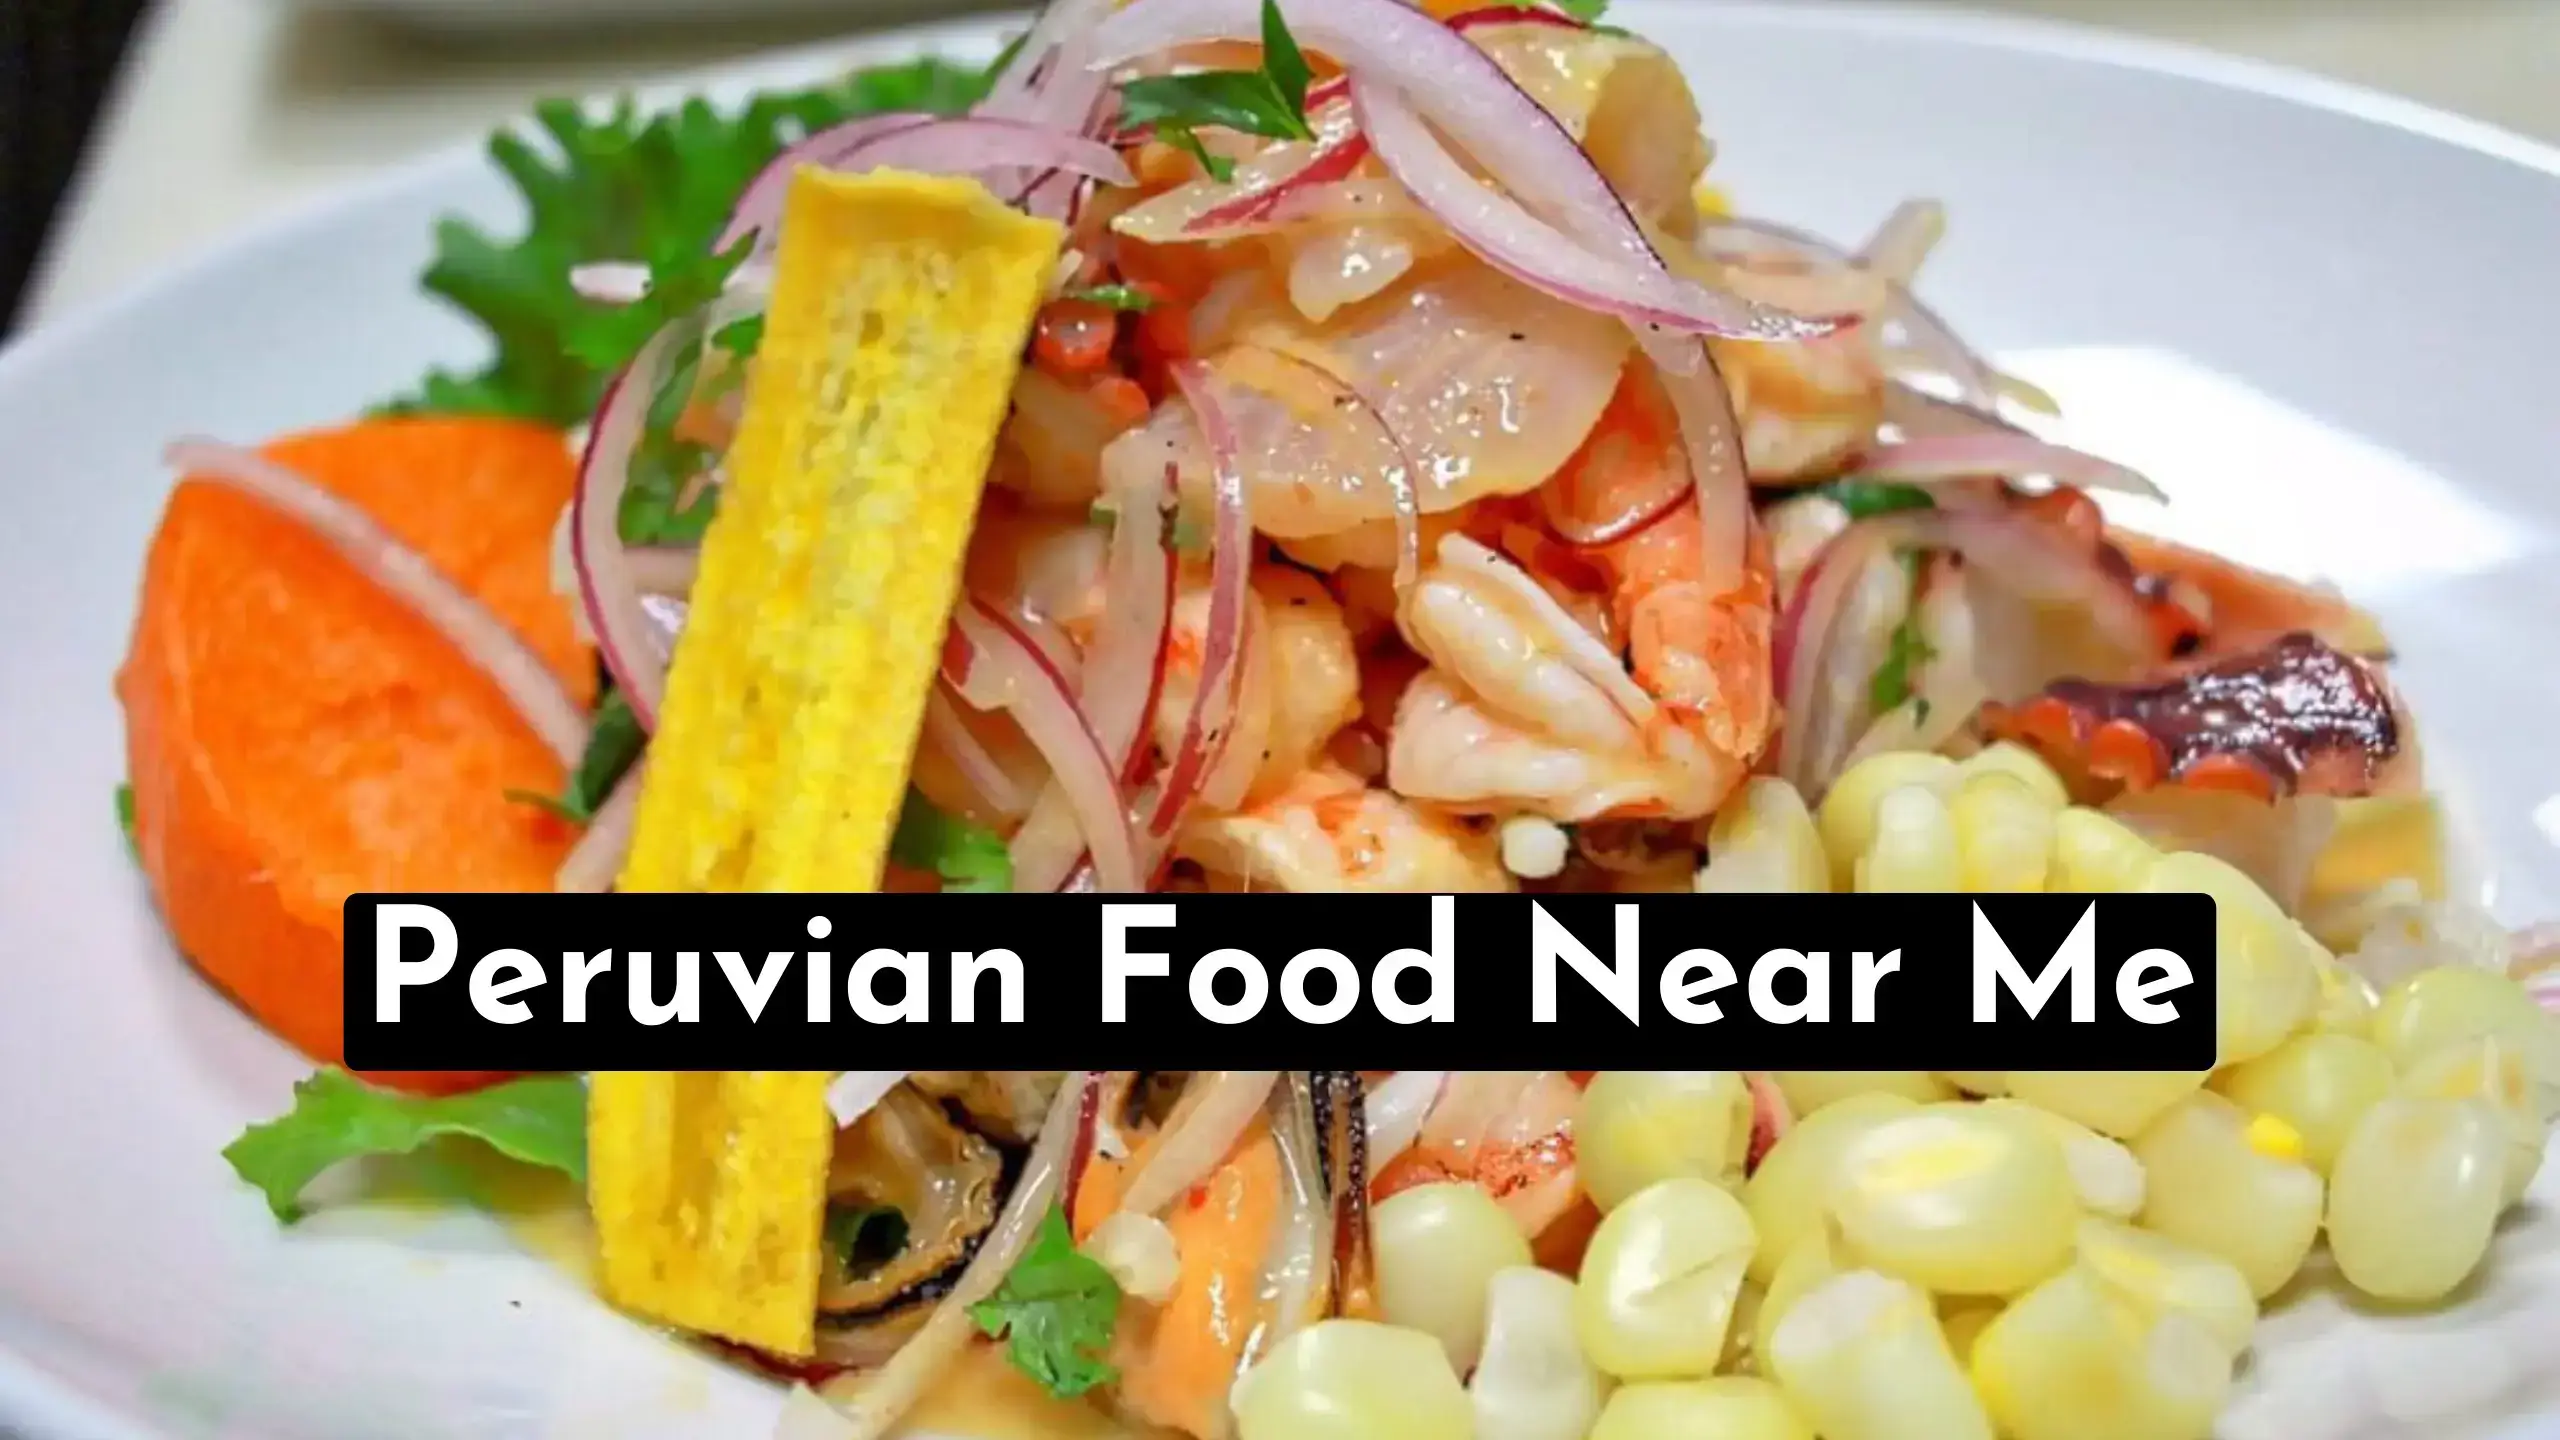 Peruvian Food Near Me – Find Best Food Nearby